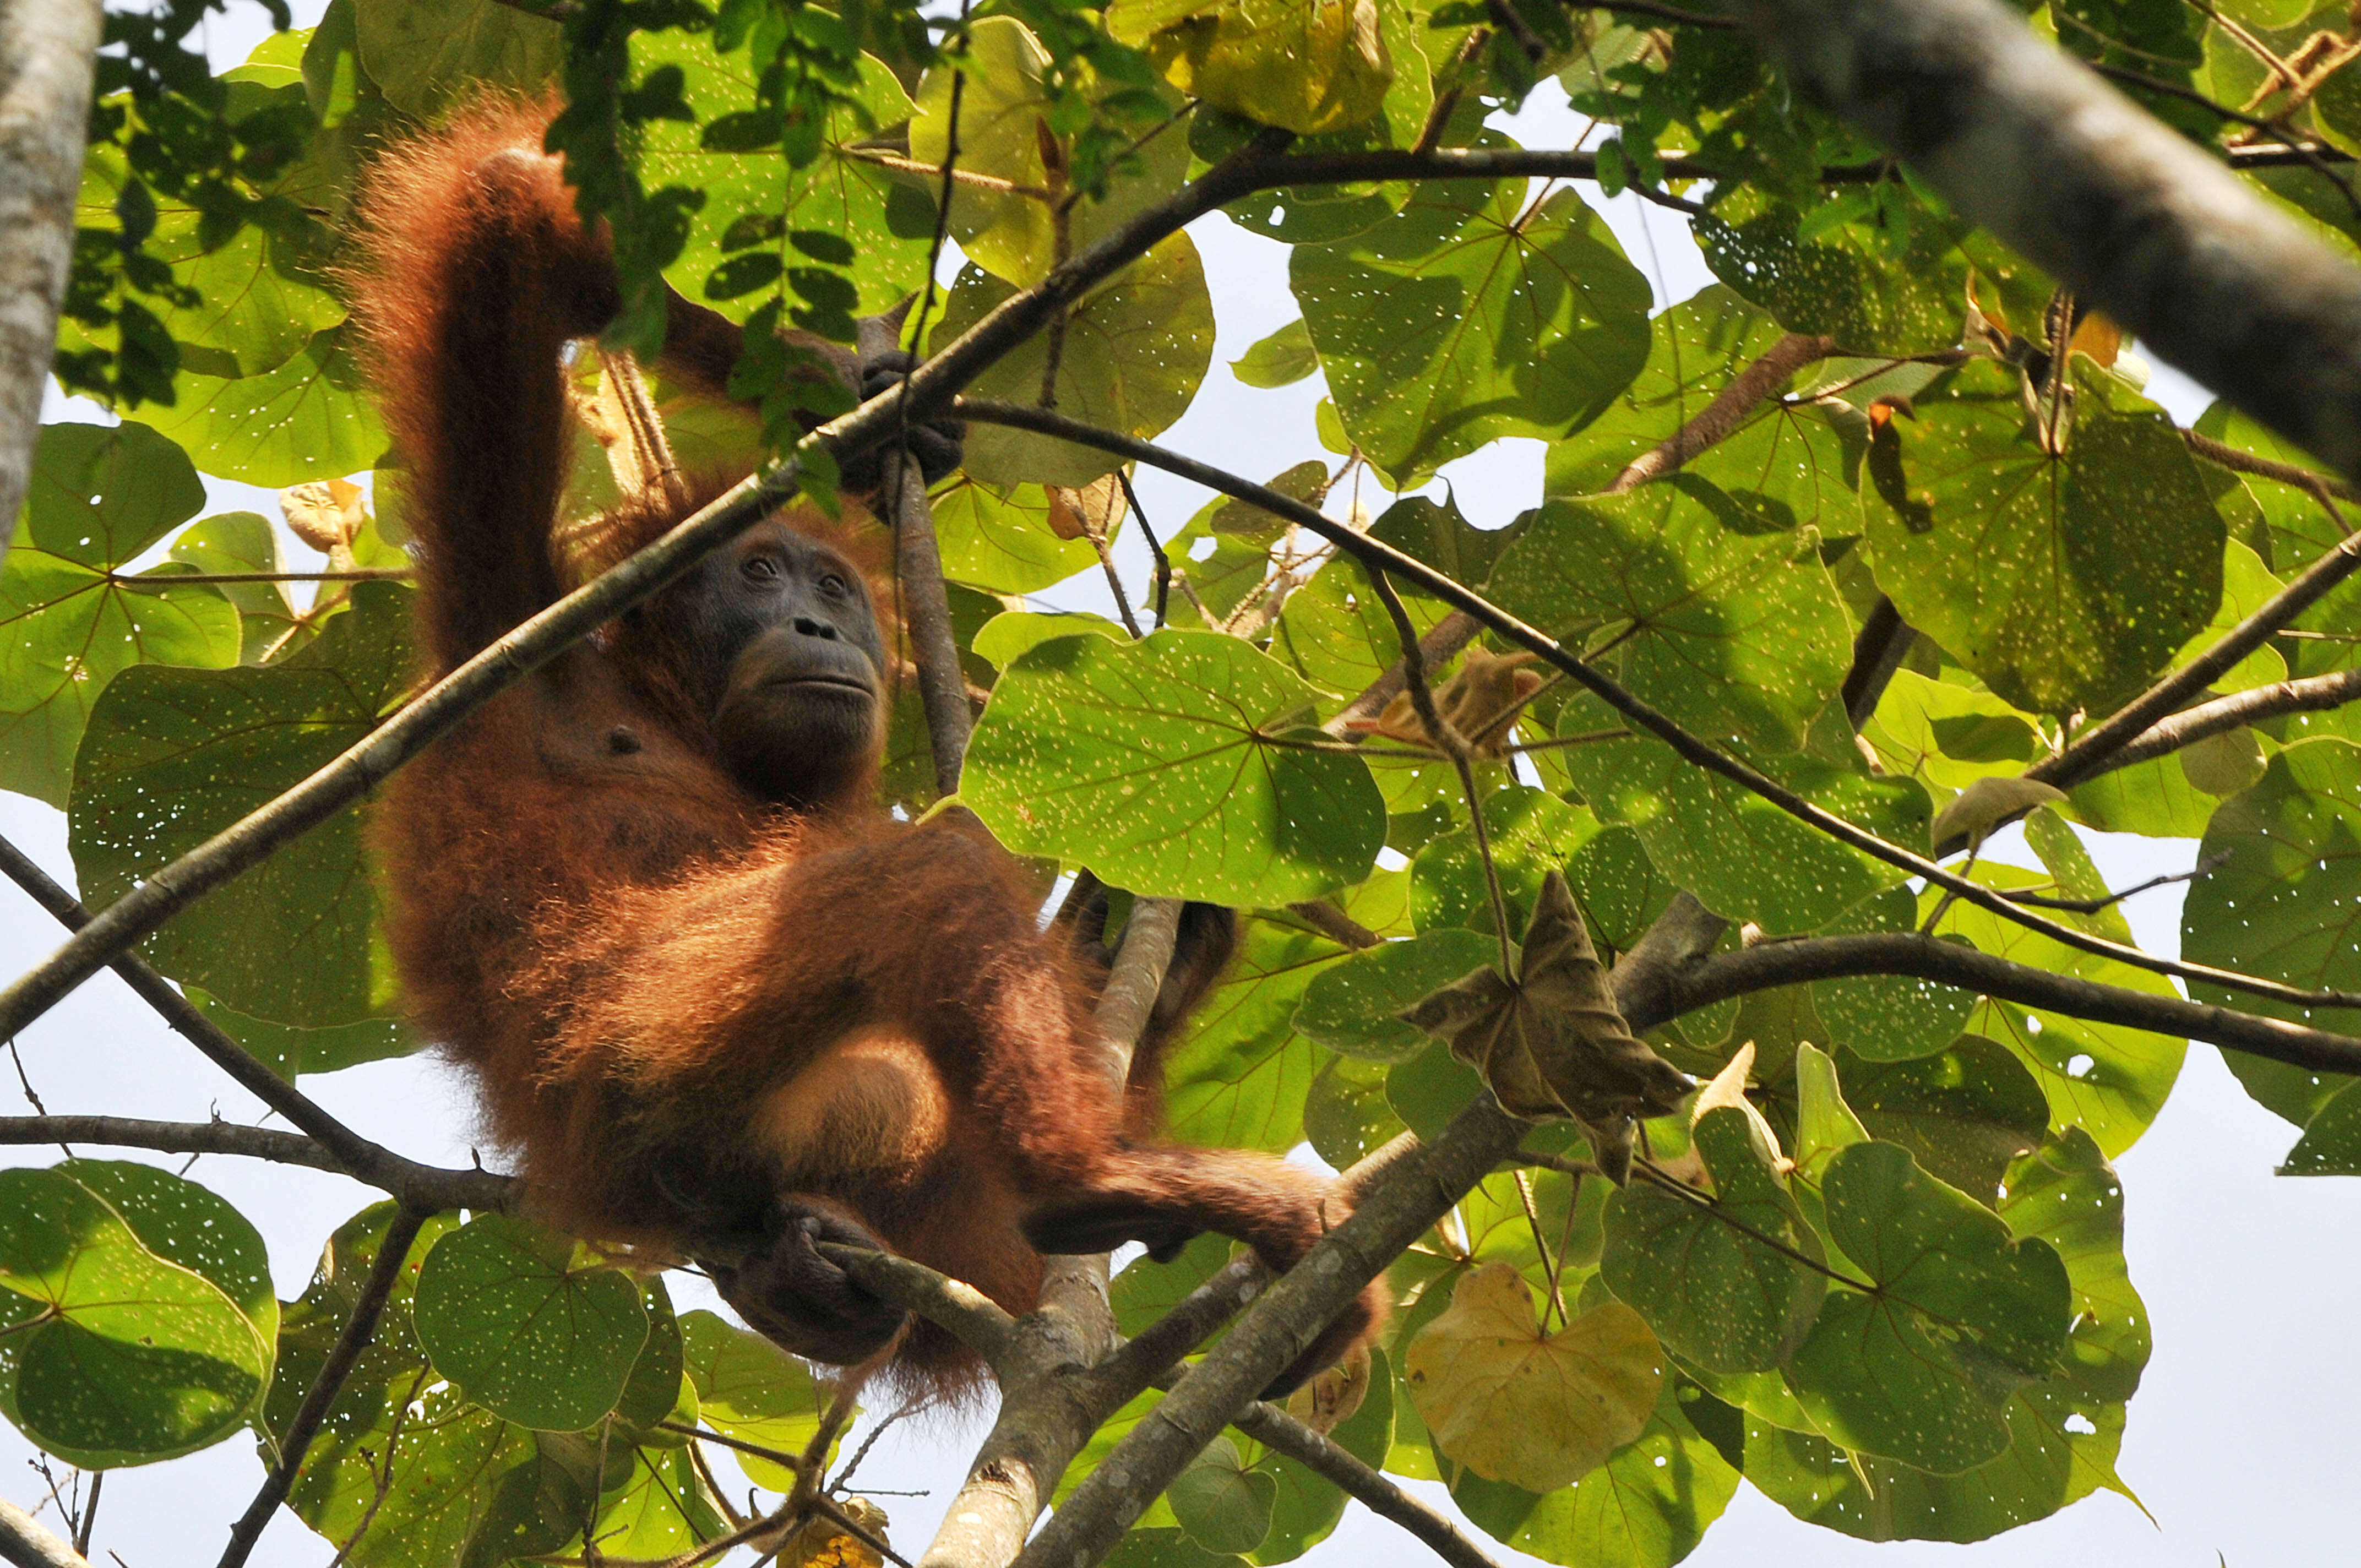 Image of Tapanuli orangutan